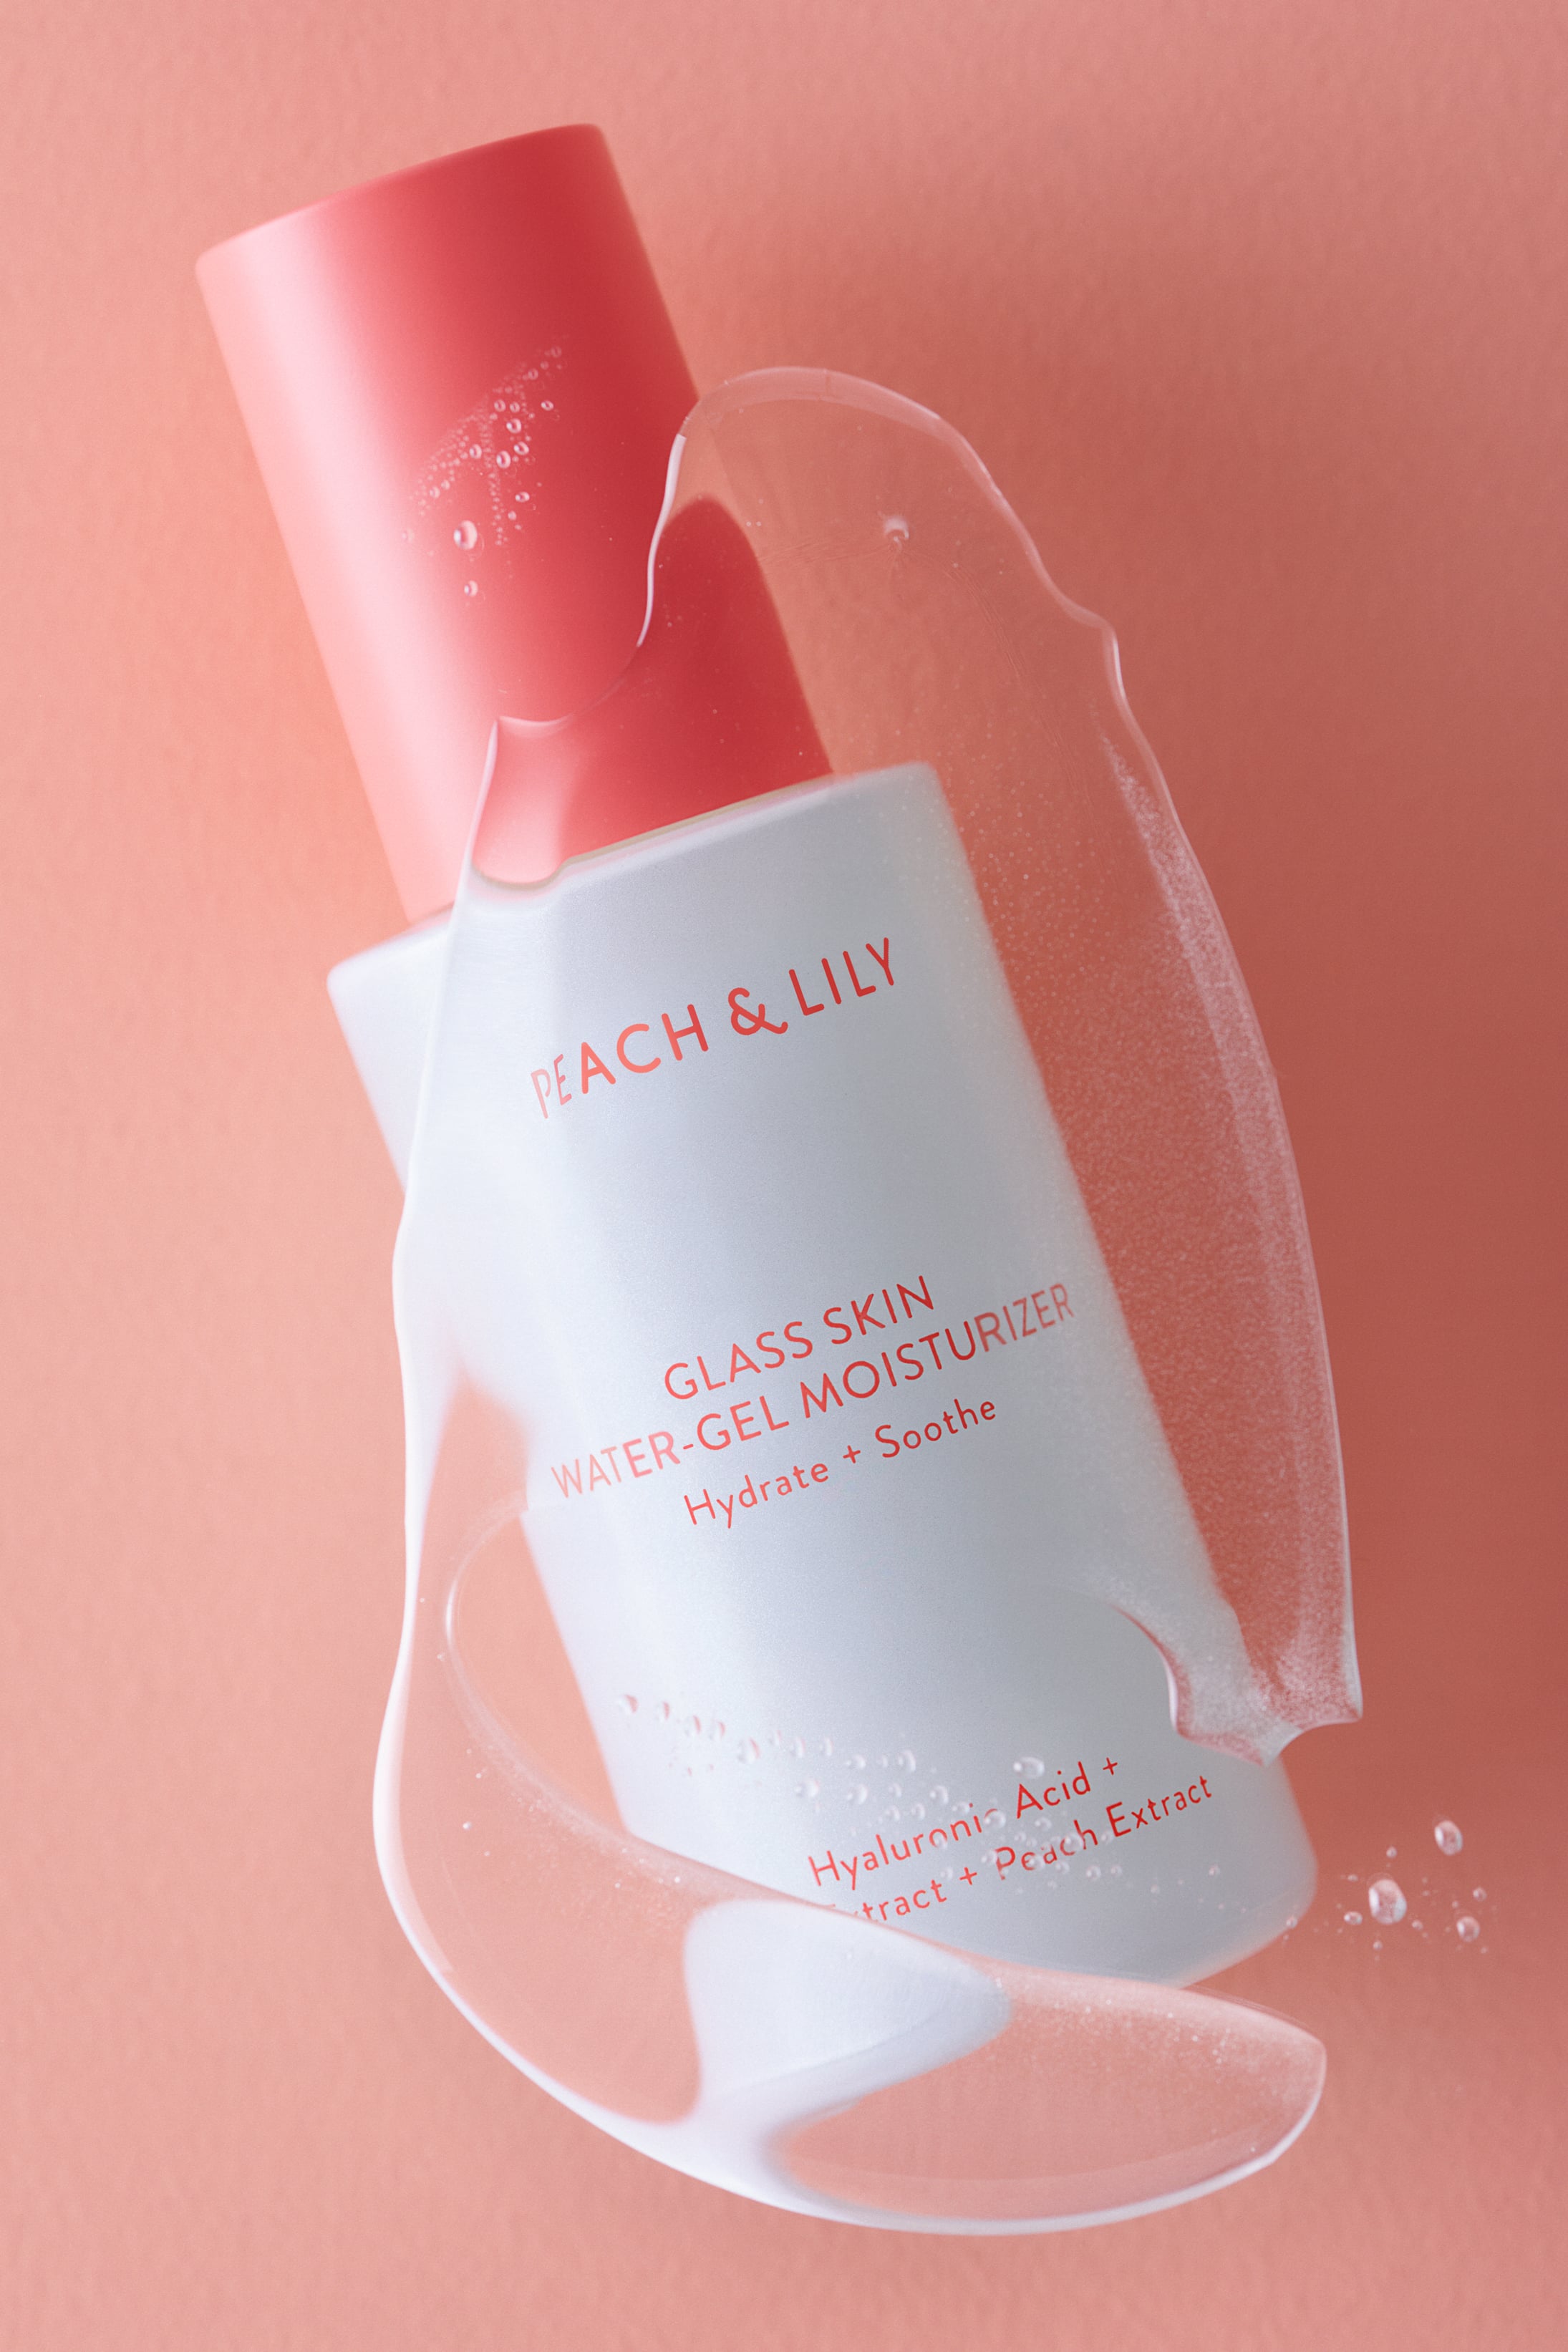 Peach & Lily Glass Skin Water-Gel Moisturizer (Ingredients Explained)